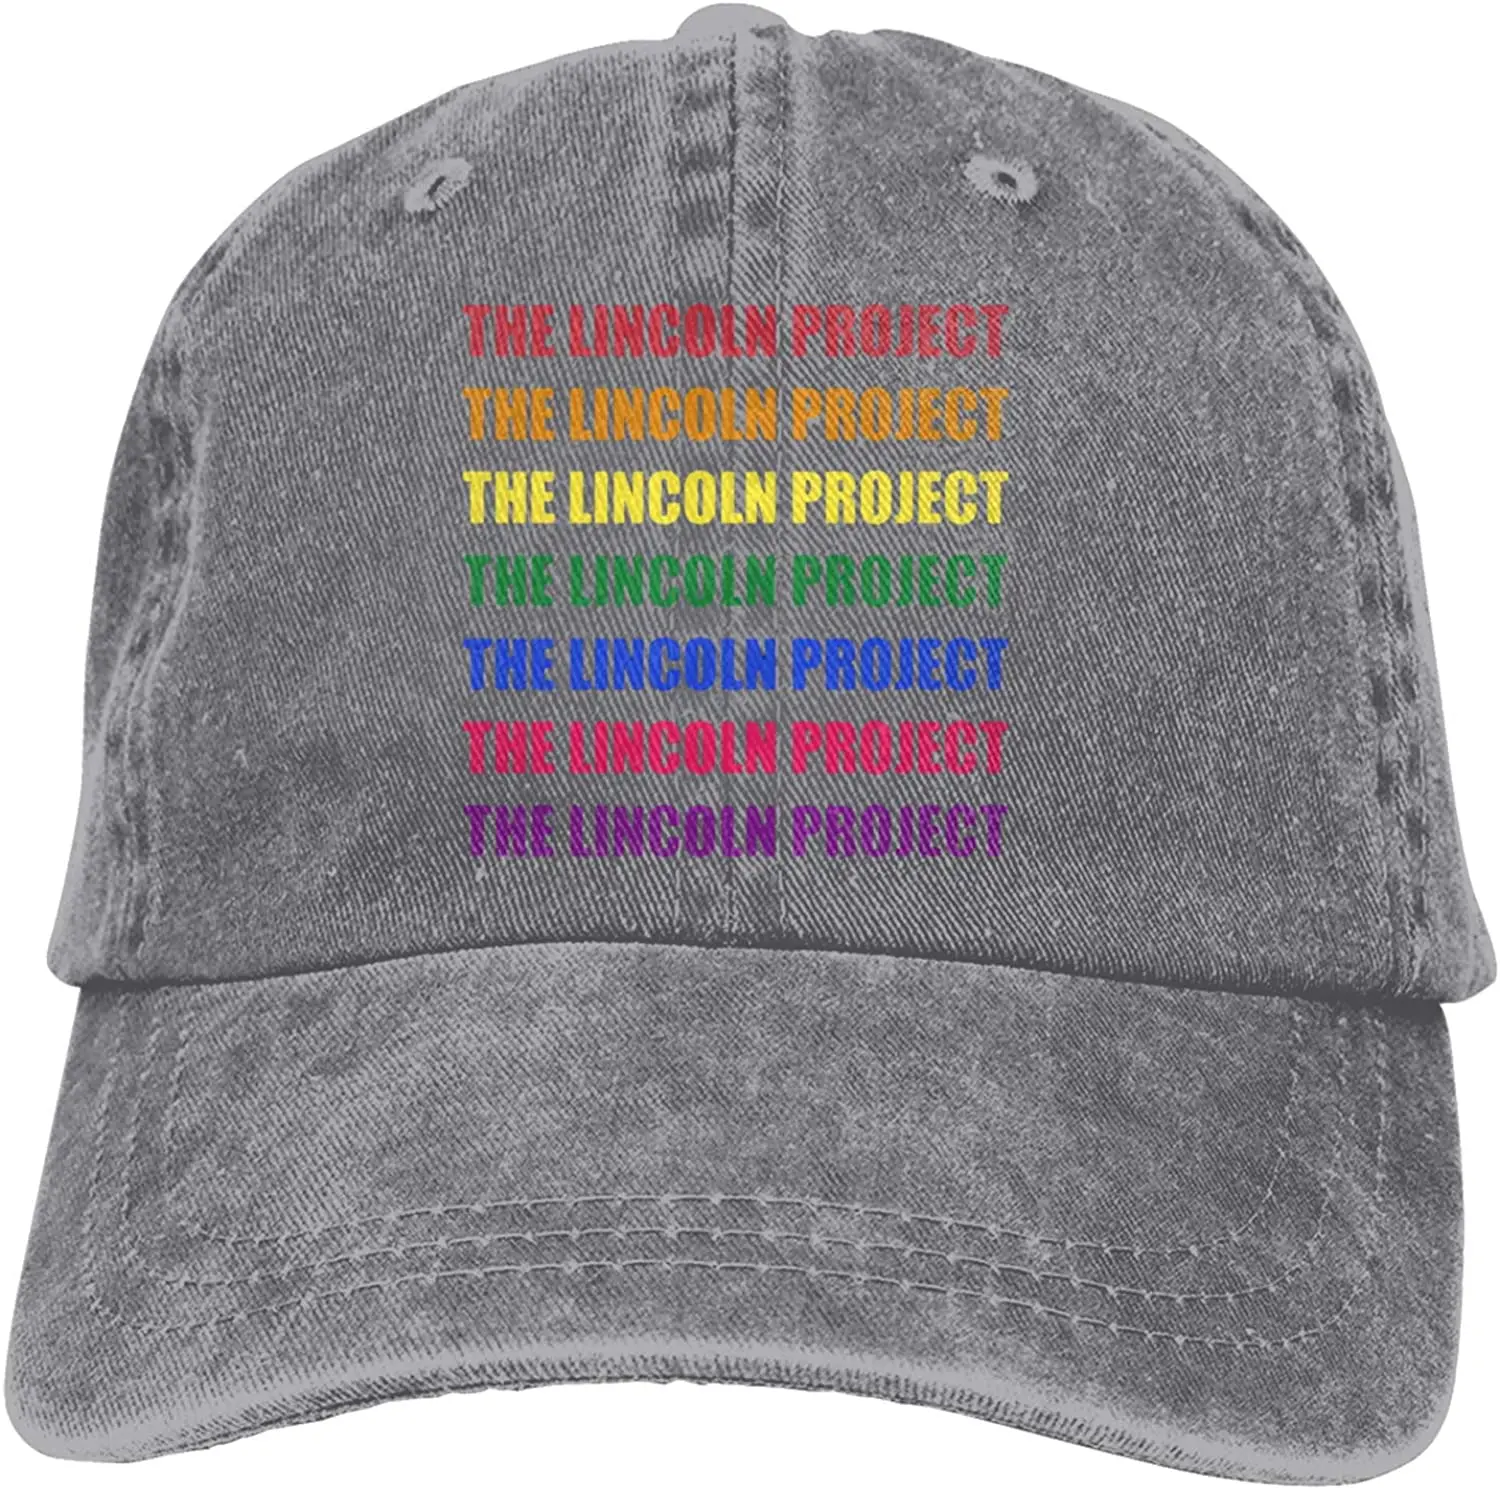 

The Lincoln Project Raibow Original Unisex Classic Vintage Washed Denim Hat Adjustable Dad Baseball Cap